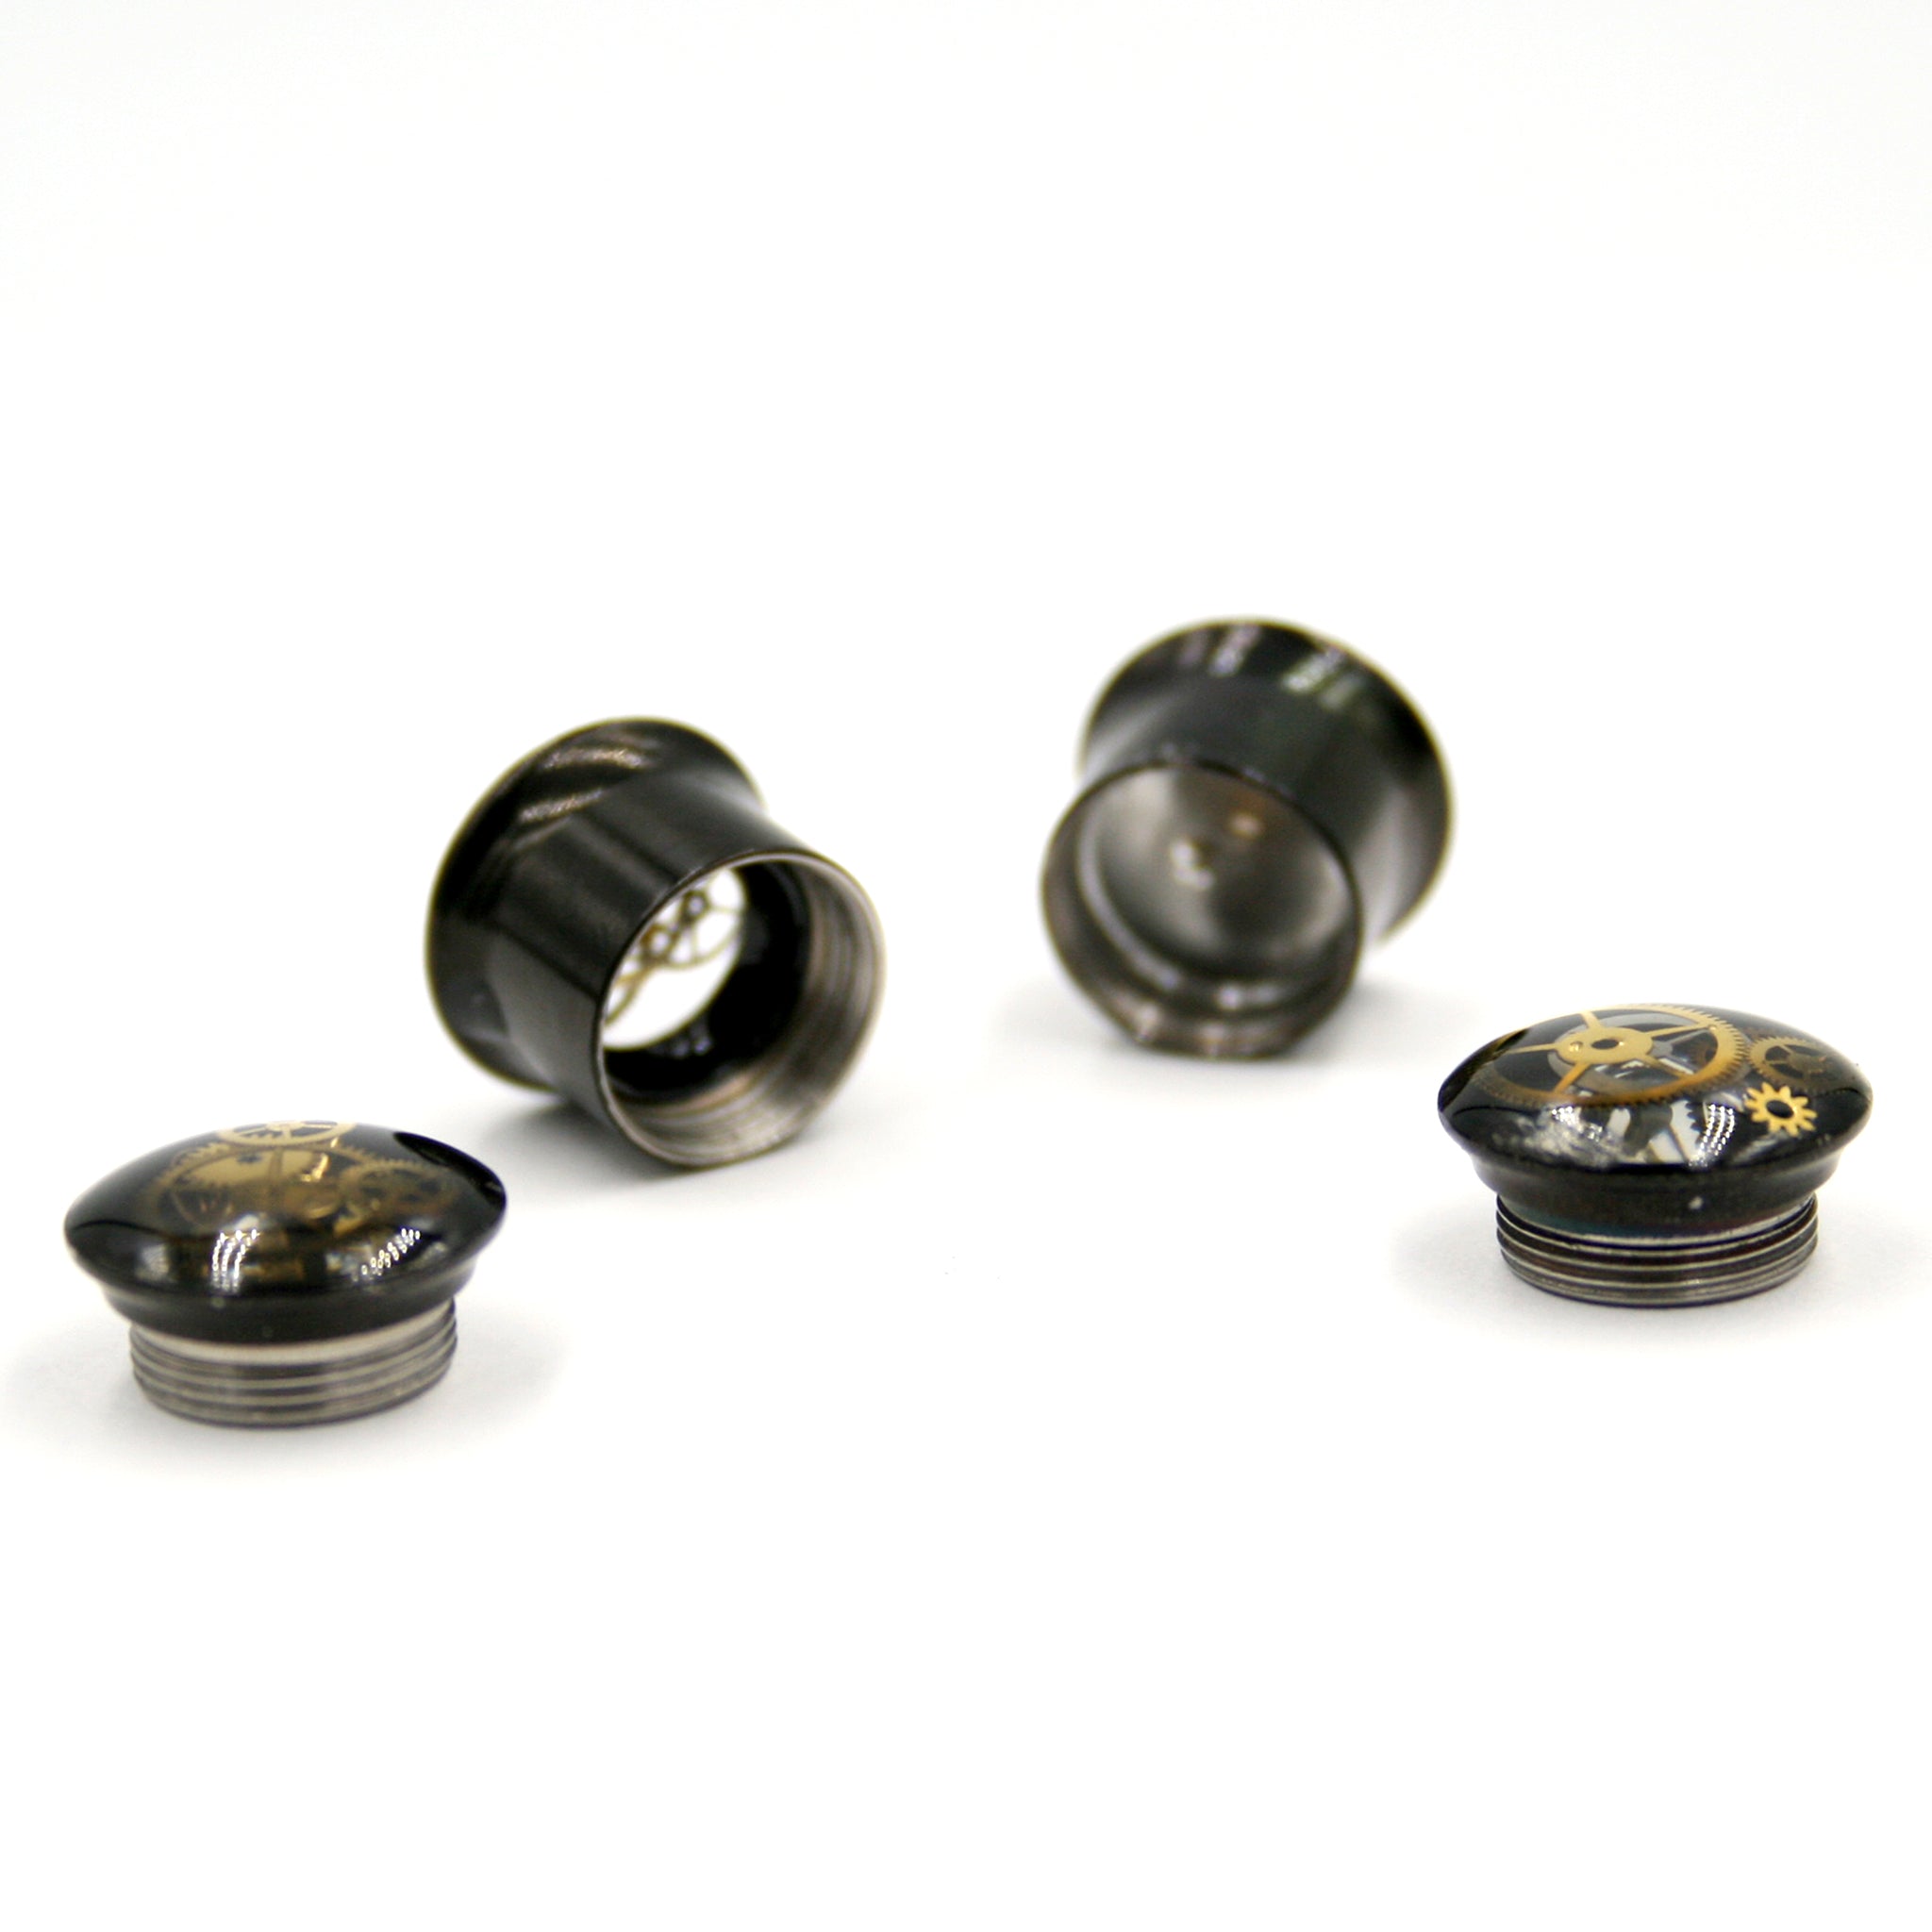 8mm small screw back ear gauges in steampunk style